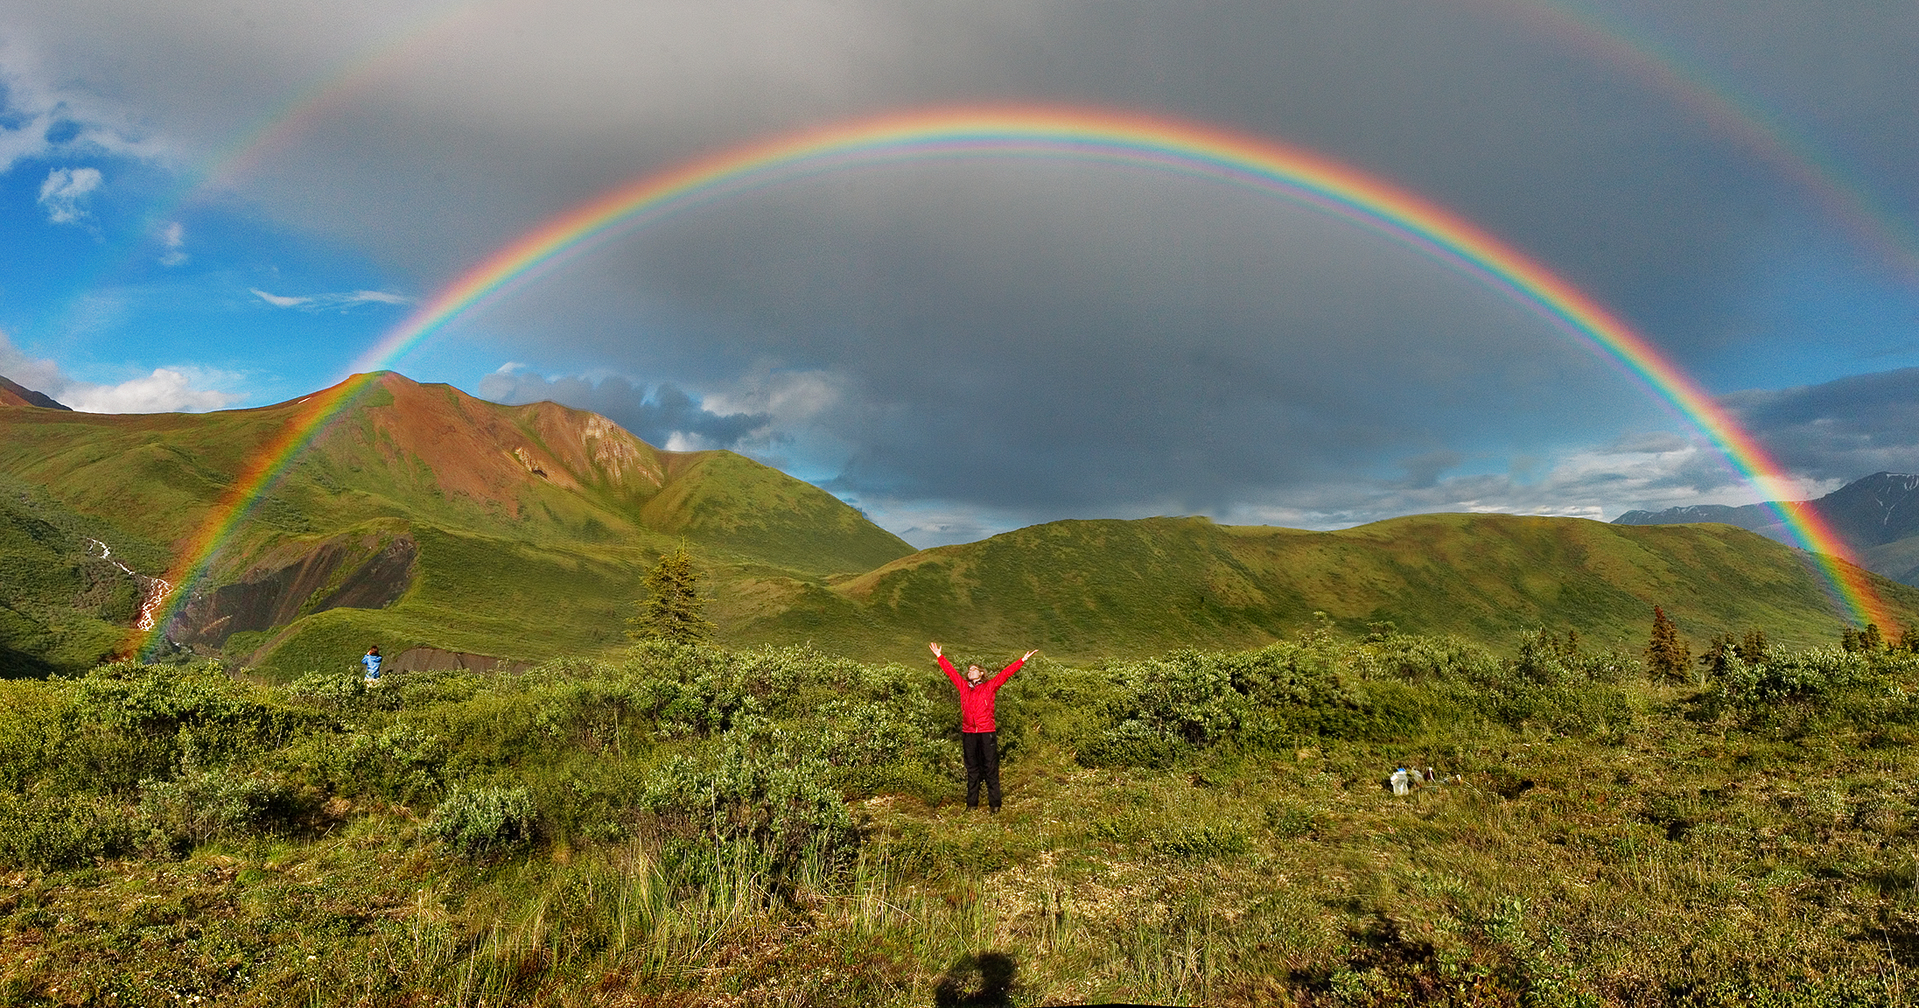 File:Double-alaskan-rainbow.jpg - Wikipedia